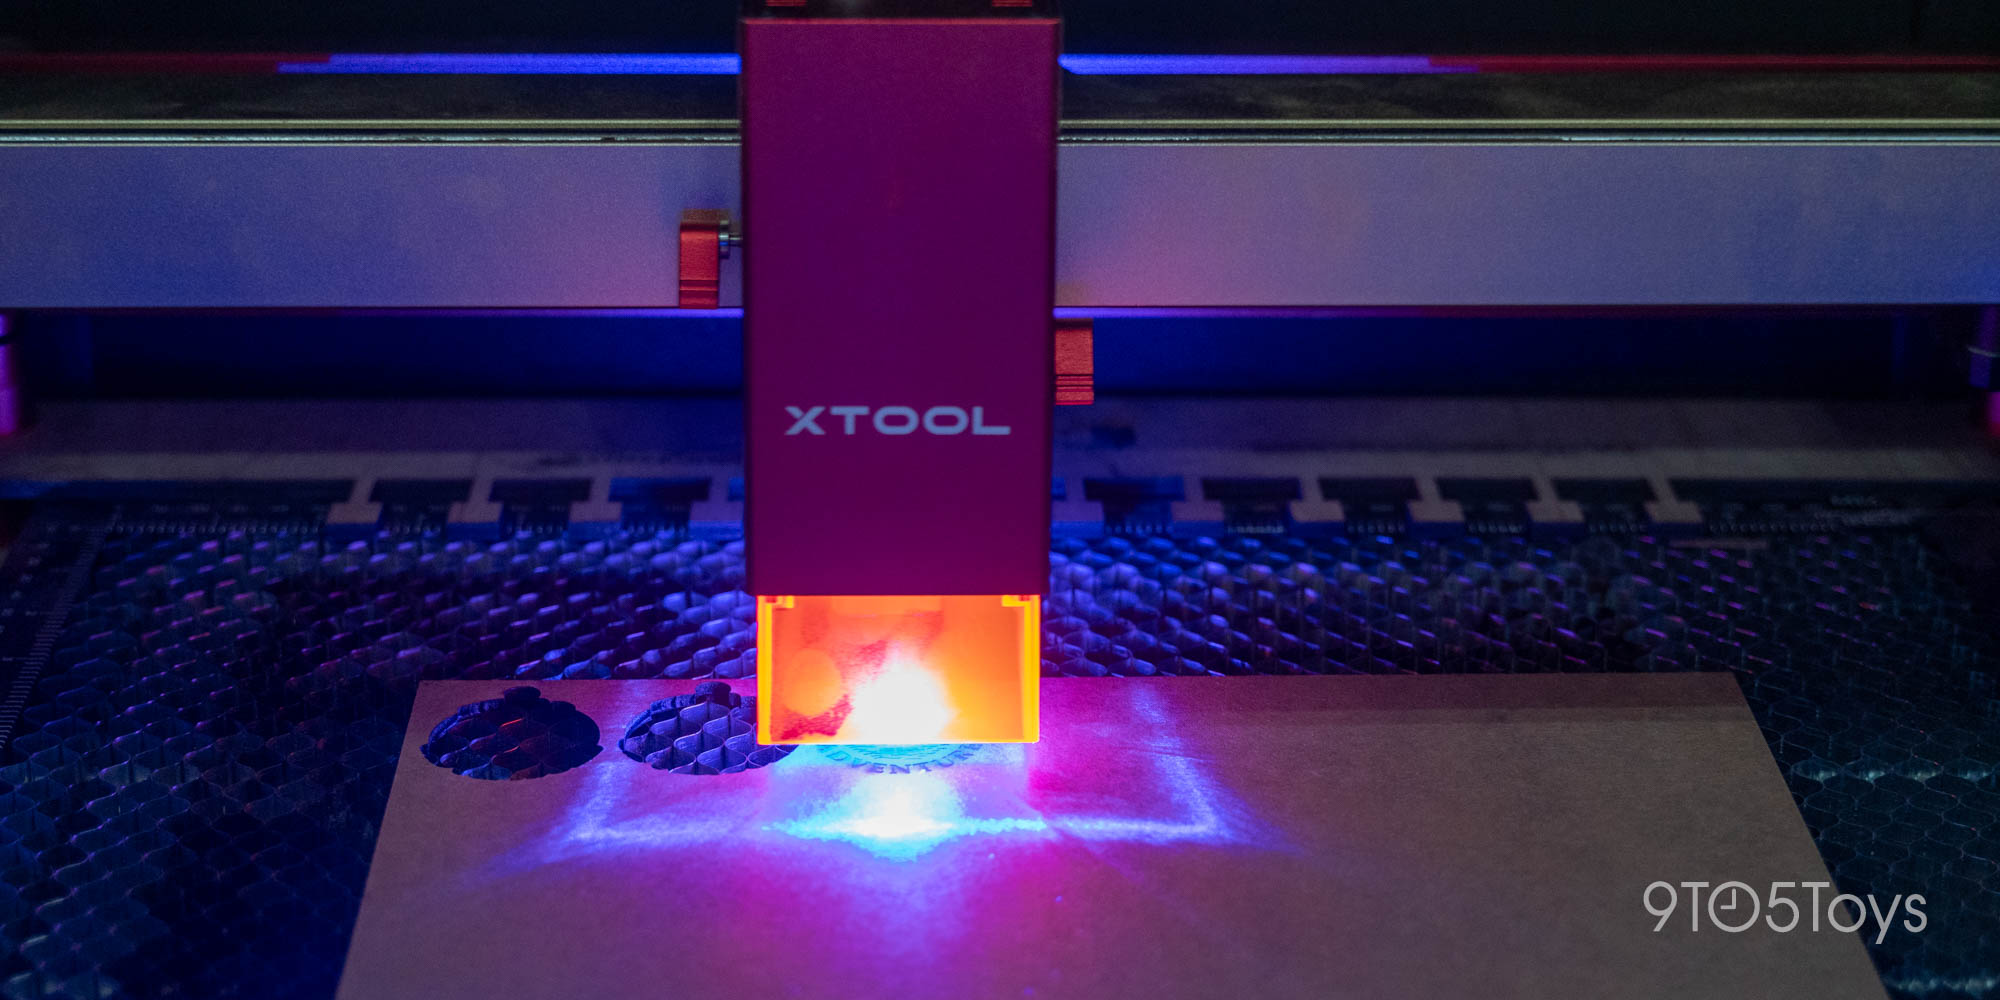 xTool D1 Pro Laser Engraver Enclosure XTool, Maker/DIY, Educational